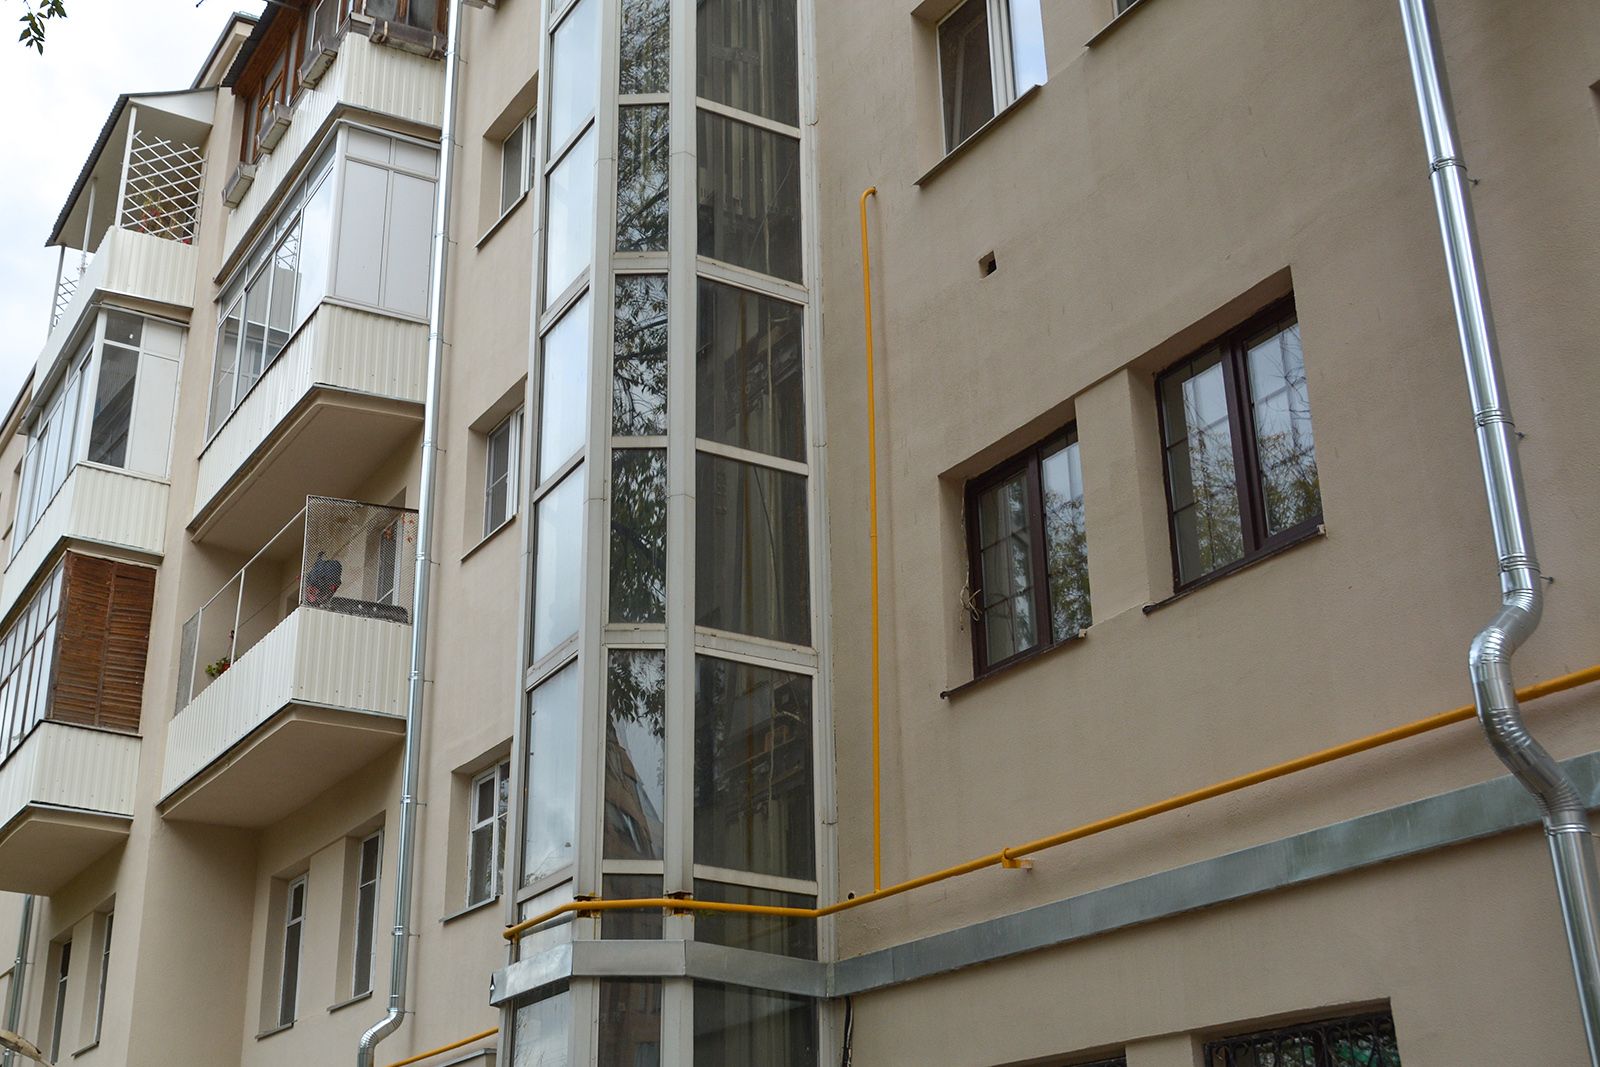 Почти 80 домов в стиле конструктивизма восстановили в Москве